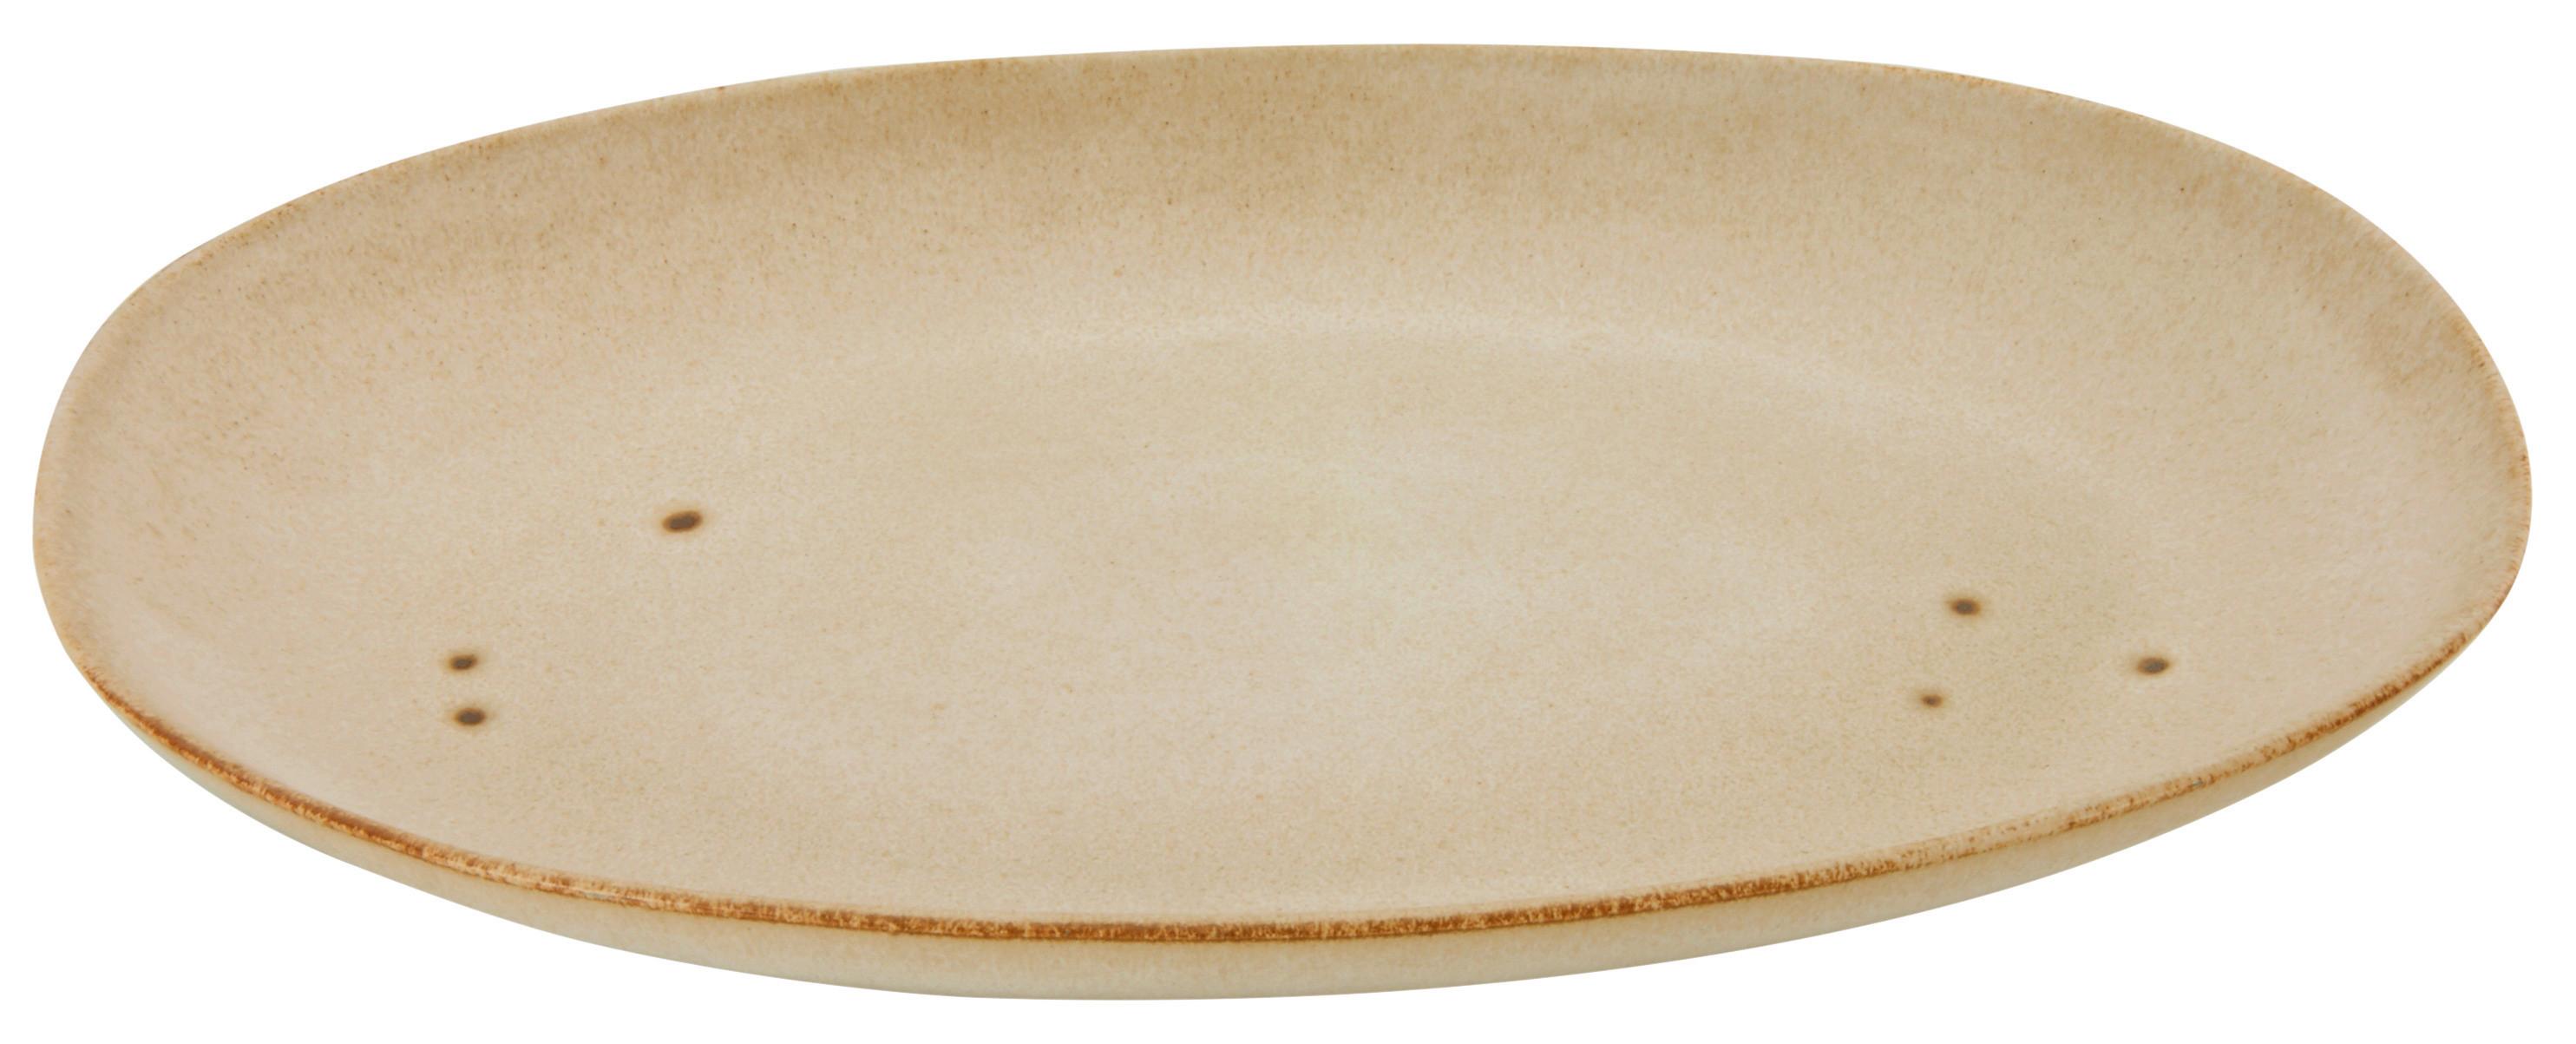 Platzteller Sahara aus Keramik Ø ca. 36cm - Weiß, LIFESTYLE, Keramik (36/4,5/22cm) - Zandiara